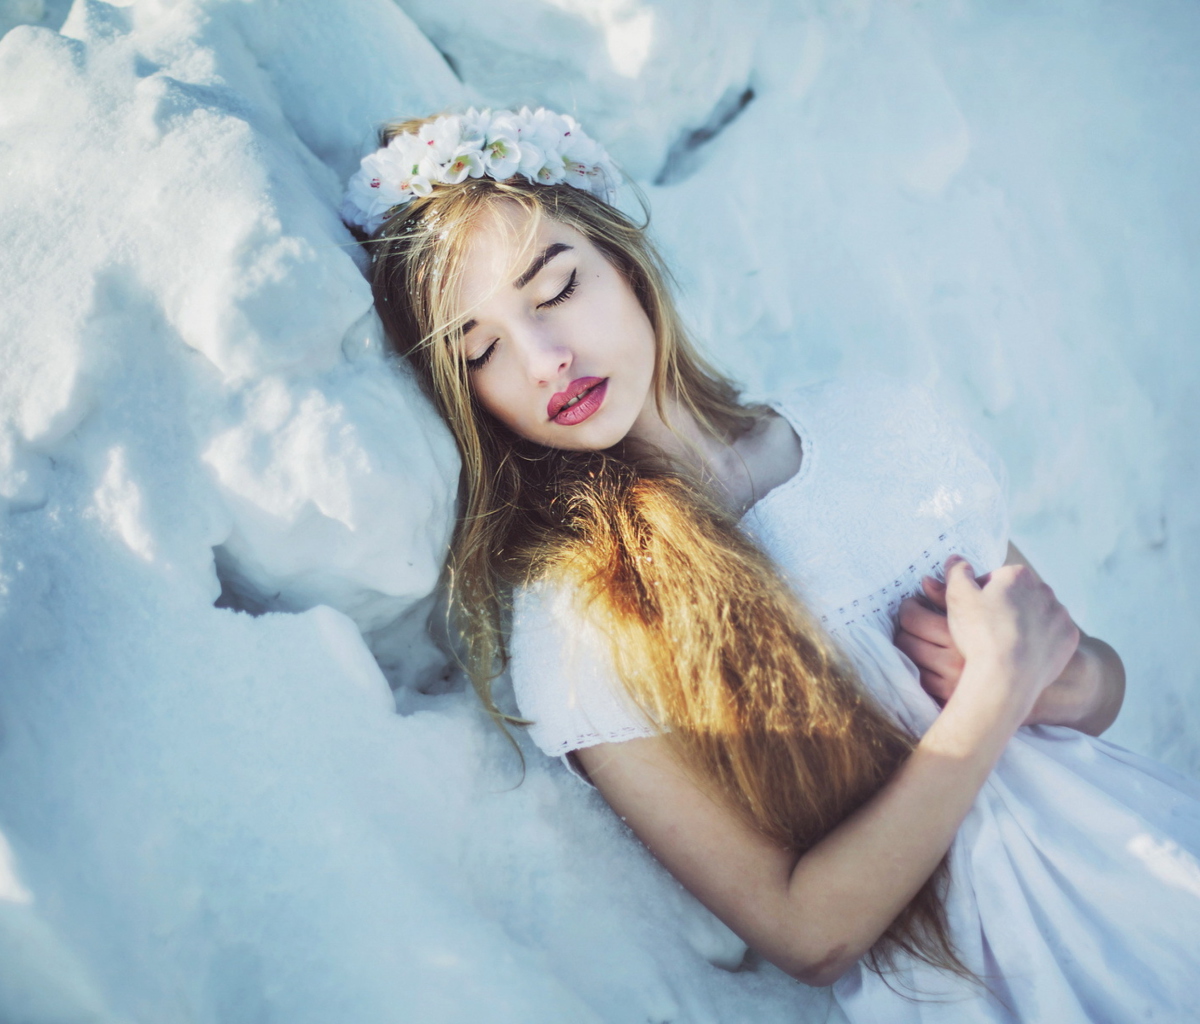 Sleeping Snow Beauty wallpaper 1200x1024